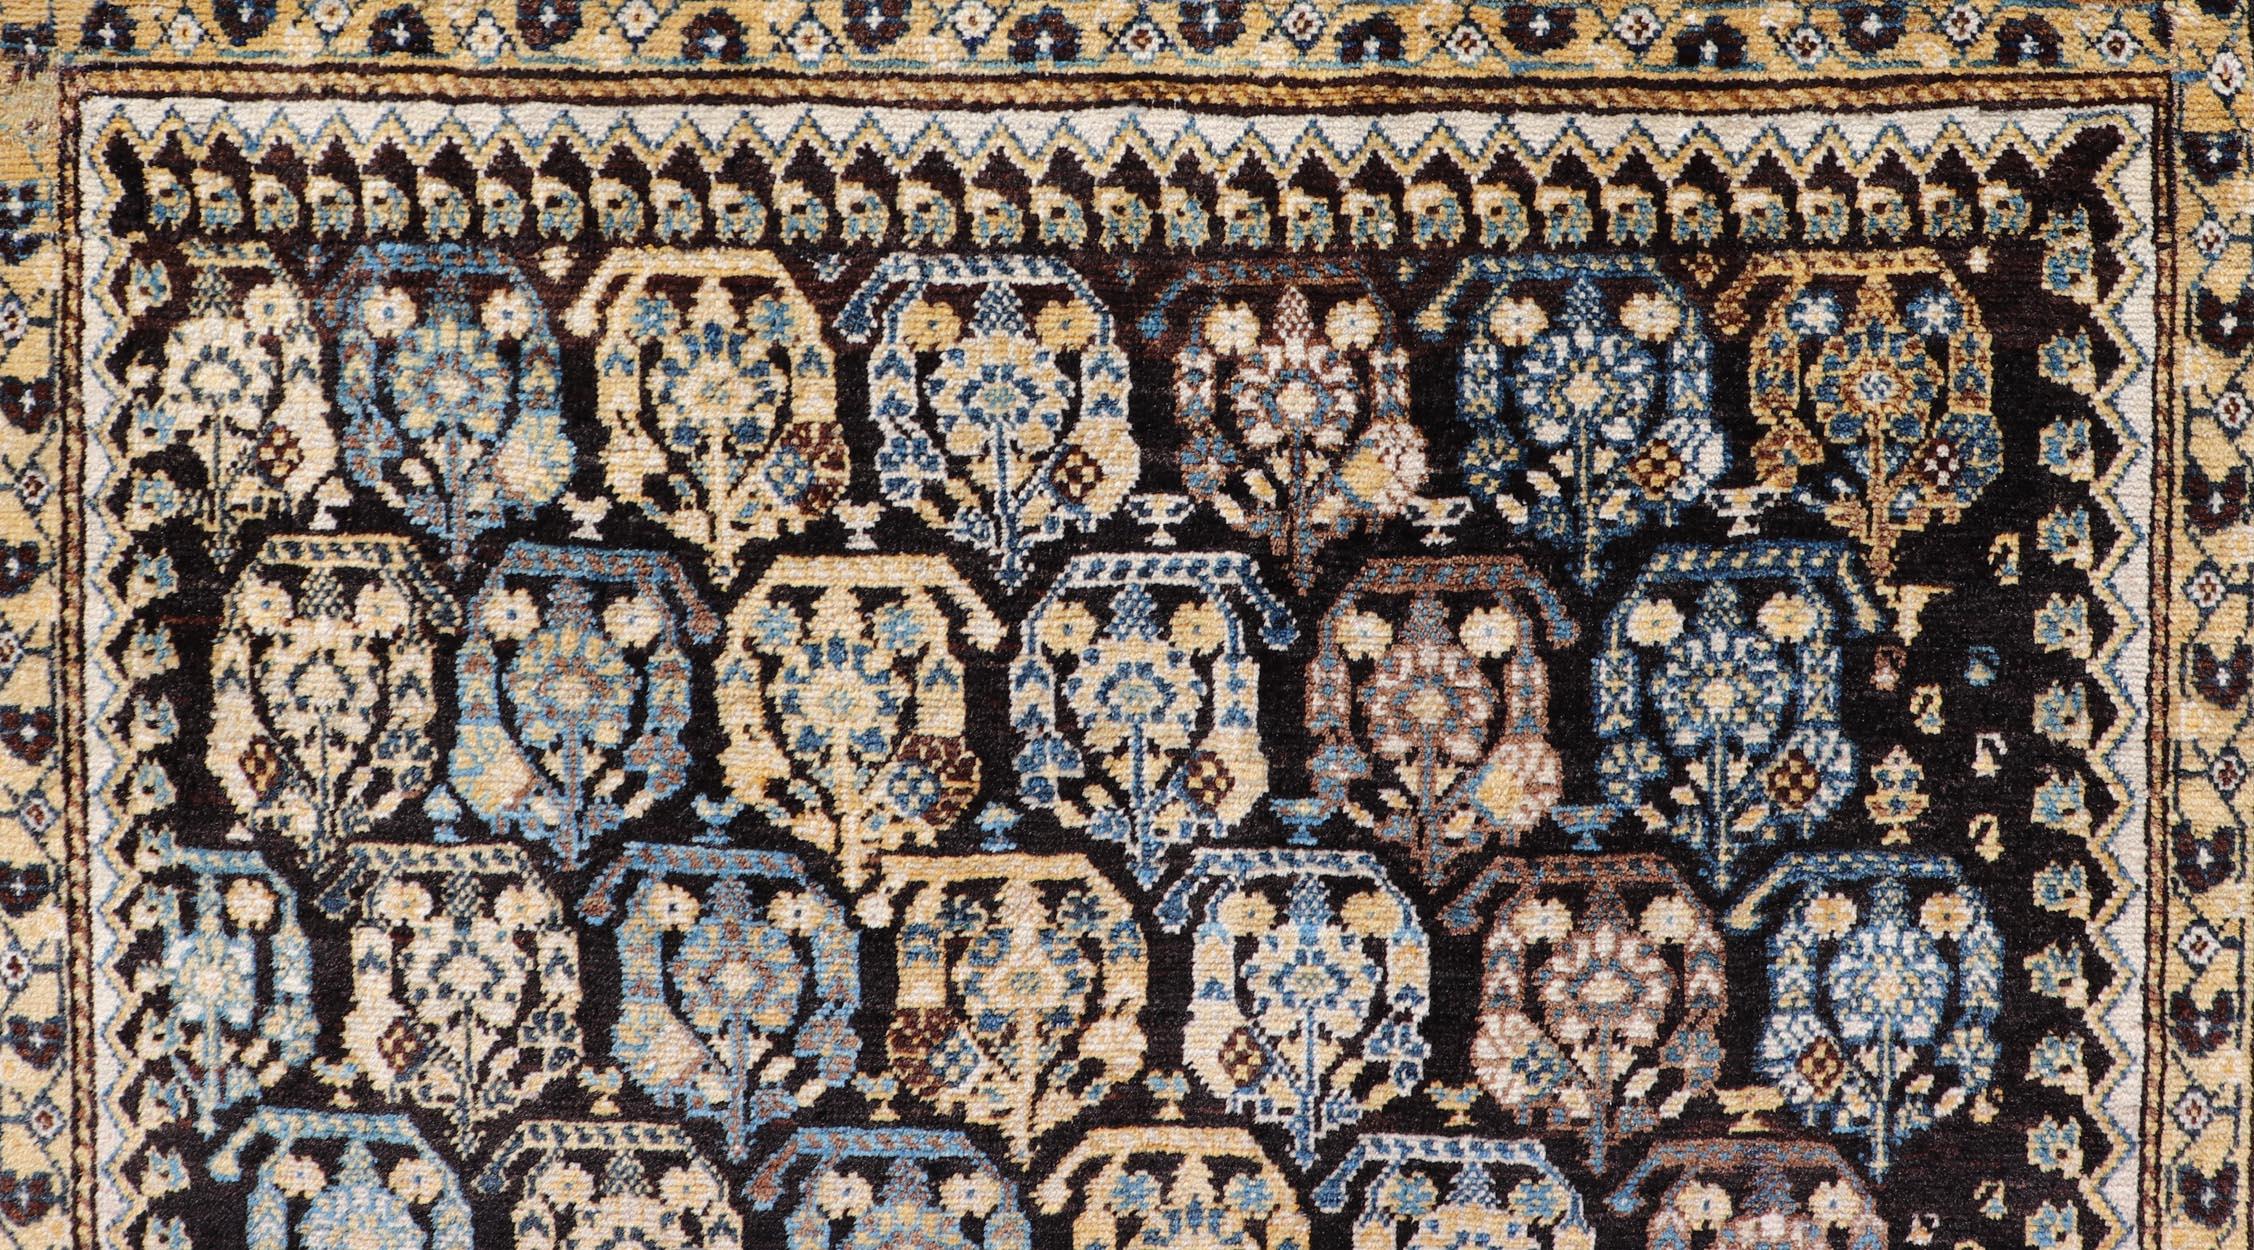 Colorful Blue Antique Persian Hamadan Rug with All-Over Tribal Motifs. Keivan Woven Arts / rug EMBC-9696-13818, country of origin / type: Iran / Hamadan, circa 1920.
Measures: 4'0 x 5'5 
This antique Persian Hamadan rug (circa early 20th century)